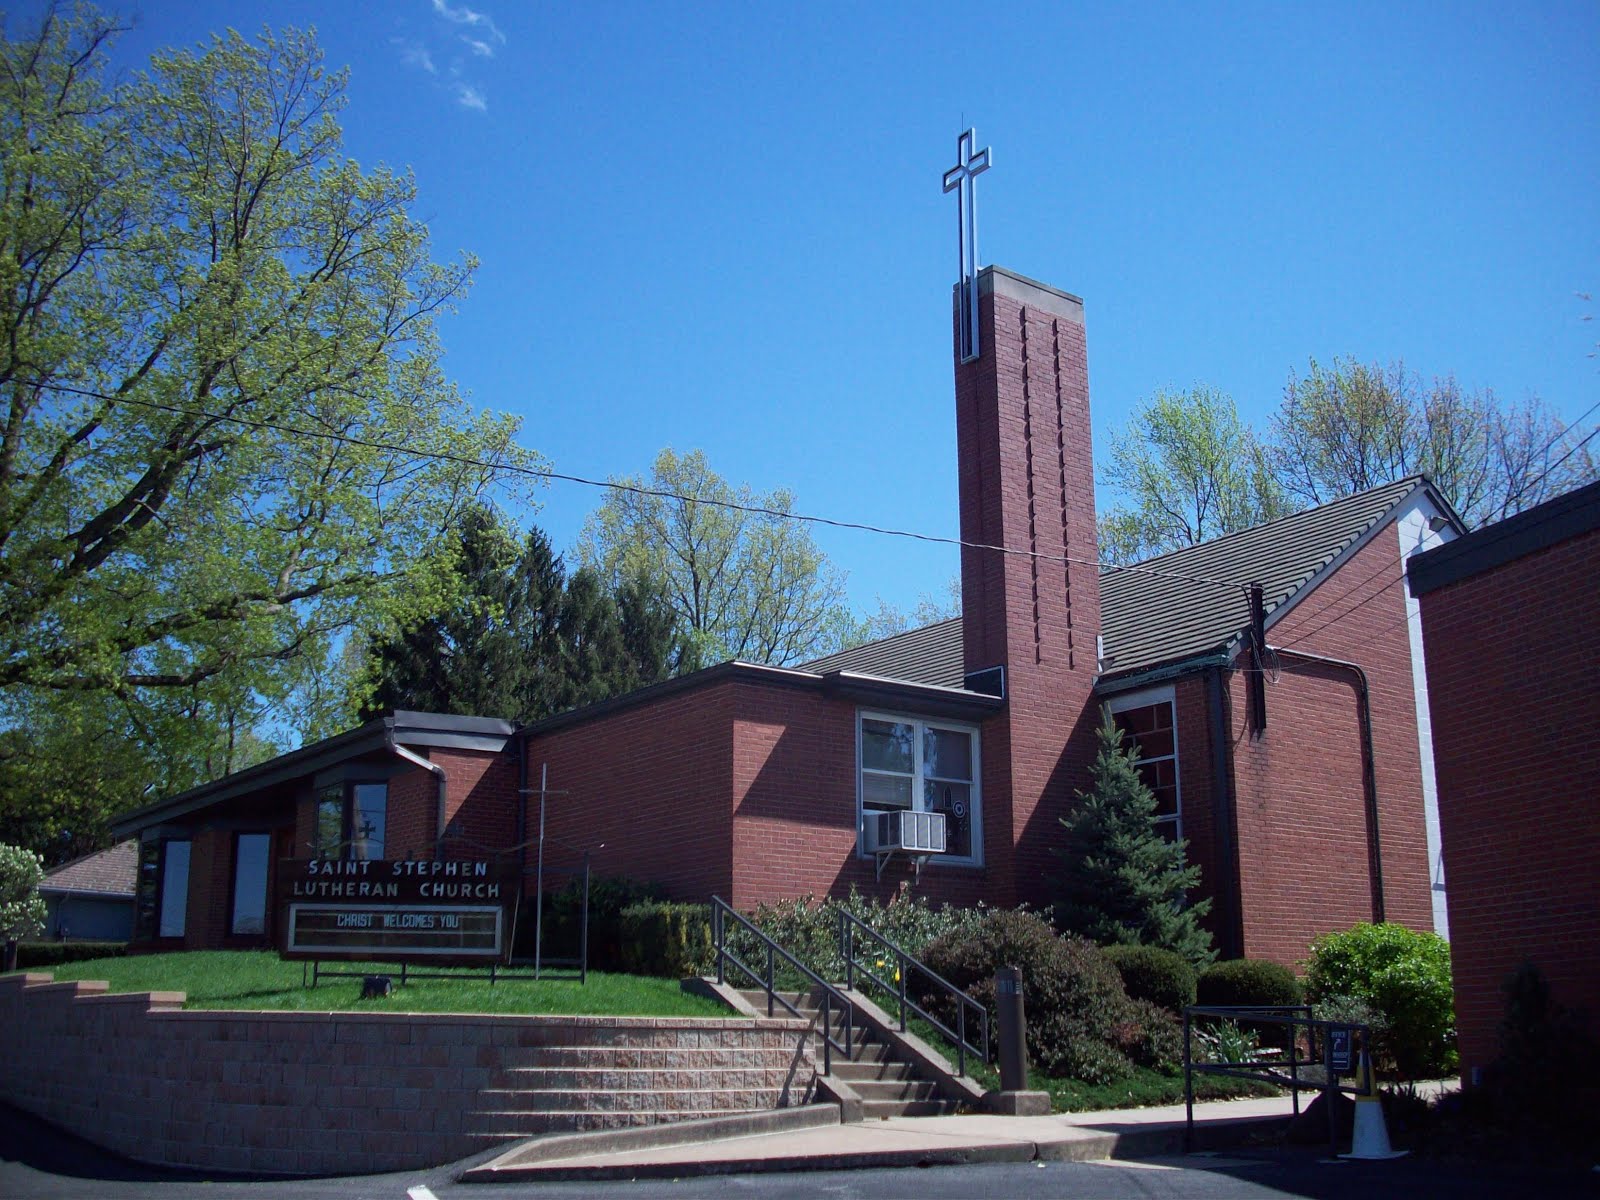 St Stephen Lutheran Church Pittsburgh, Pennsylvania: October 2012